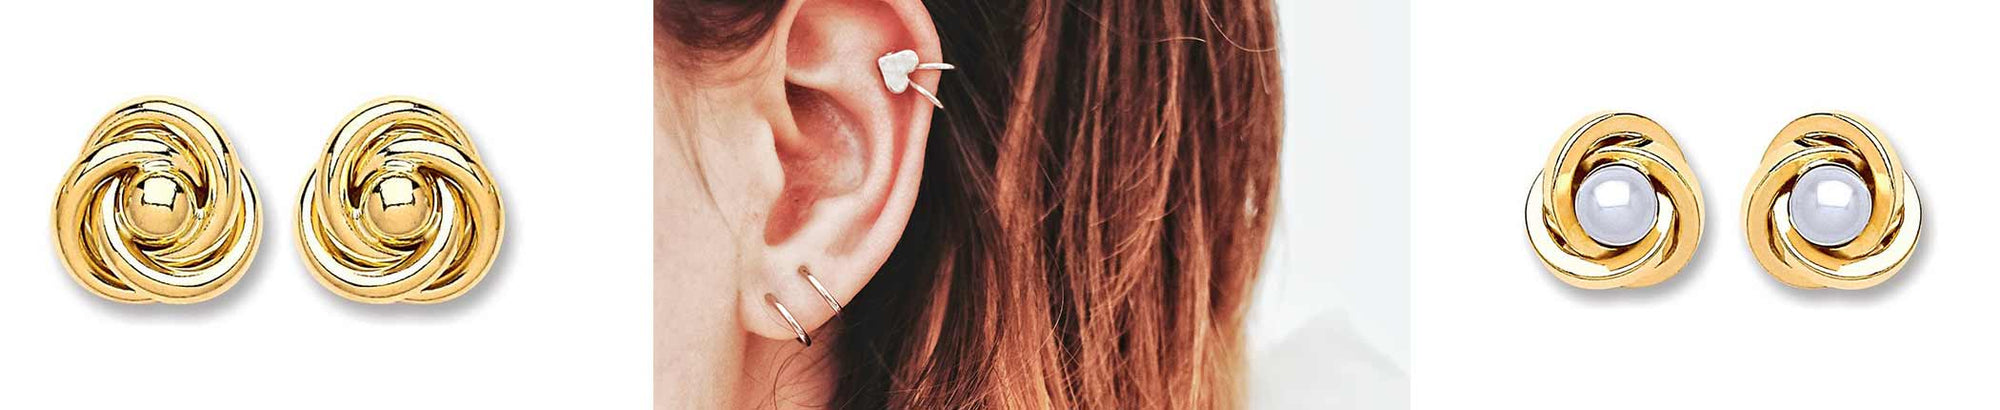 Gold stud earrings: FAQs